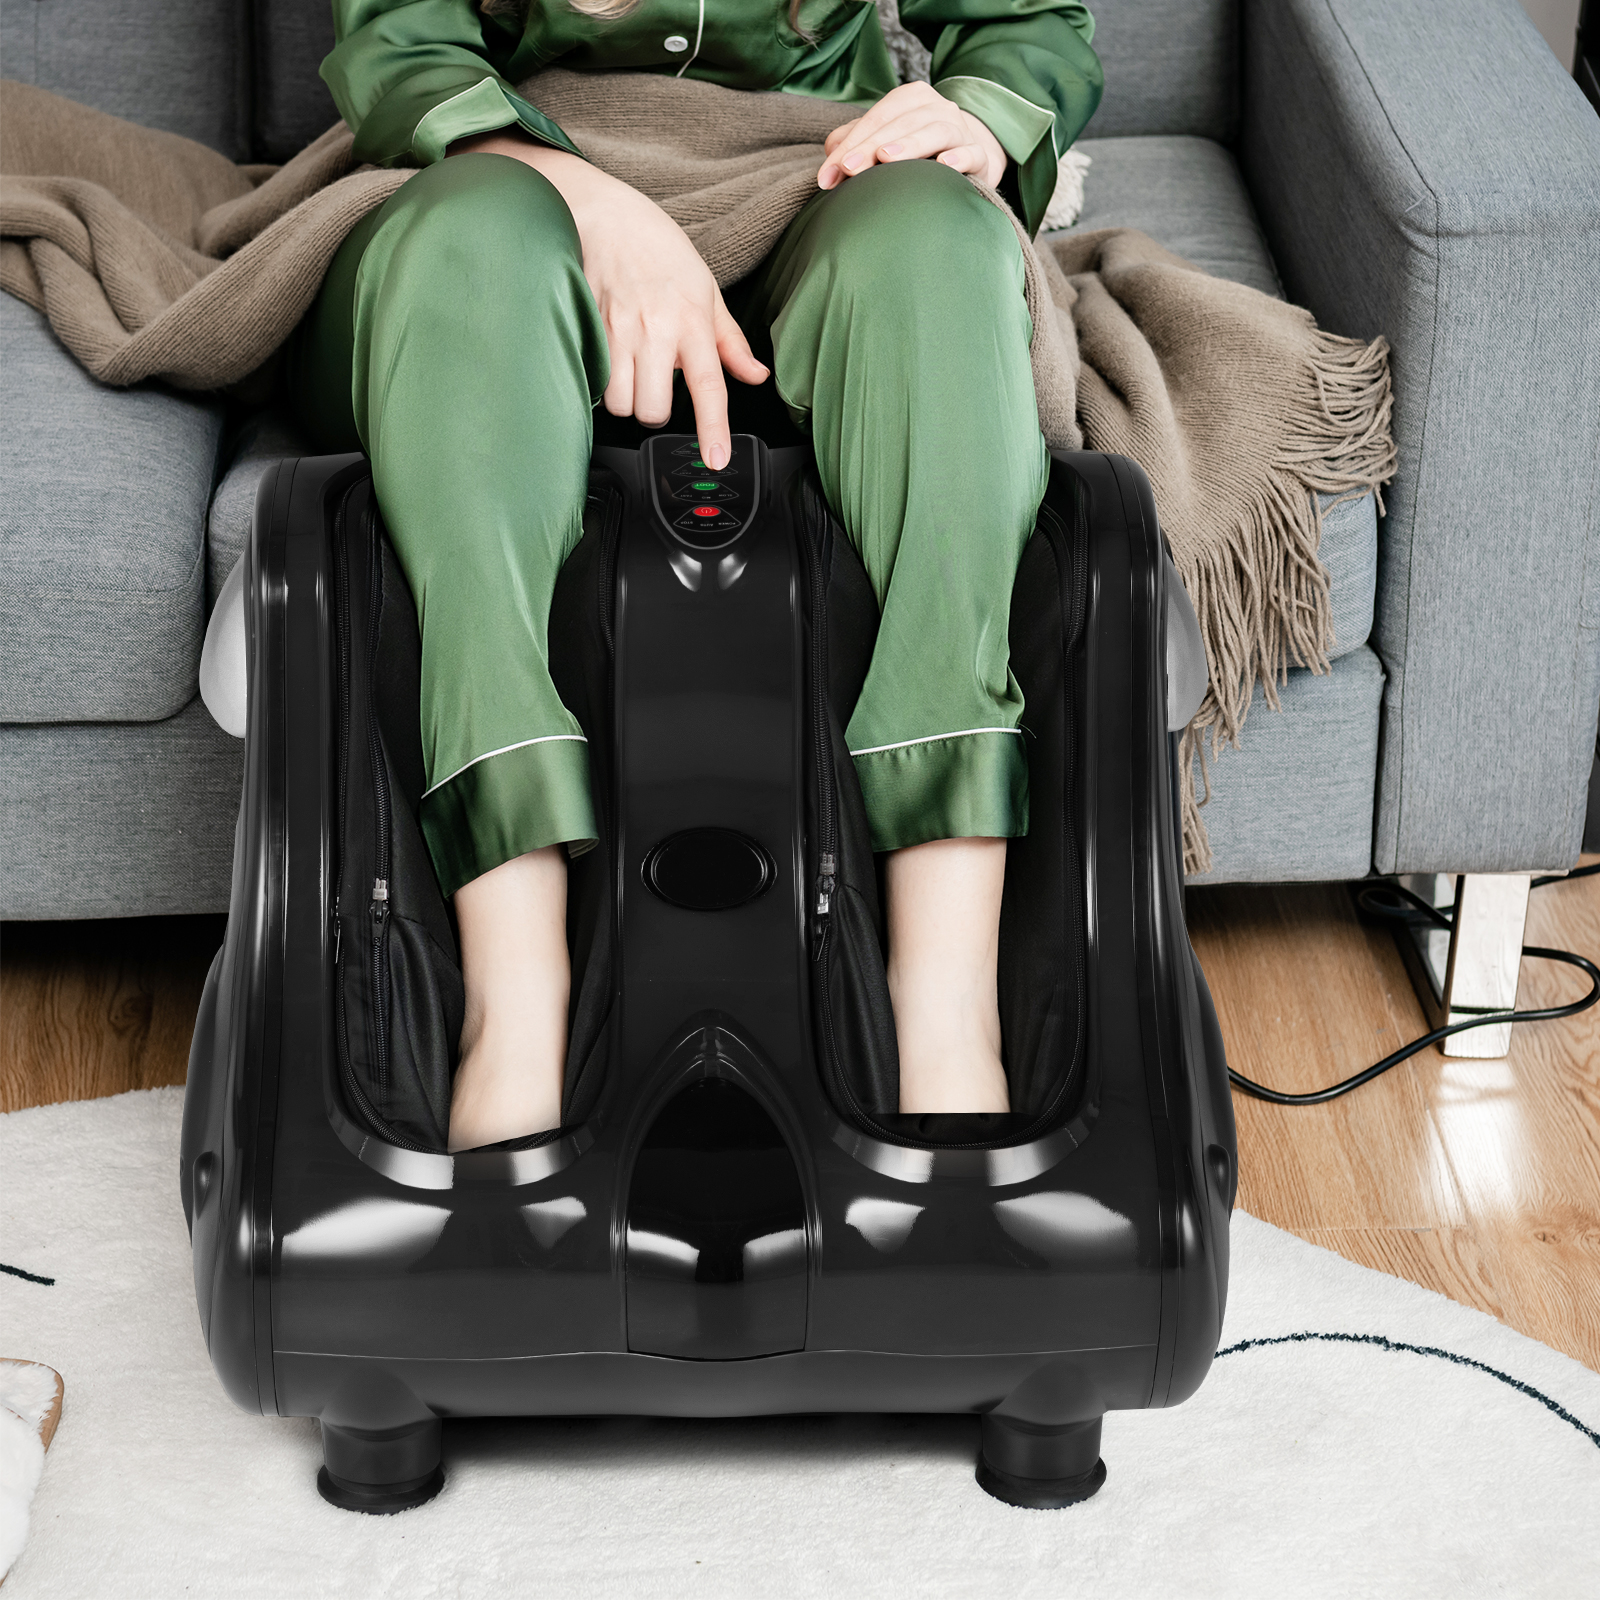 Costway Leg Massager Shiatsu Kneading Rolling Vibration Heating Foot Calf Black